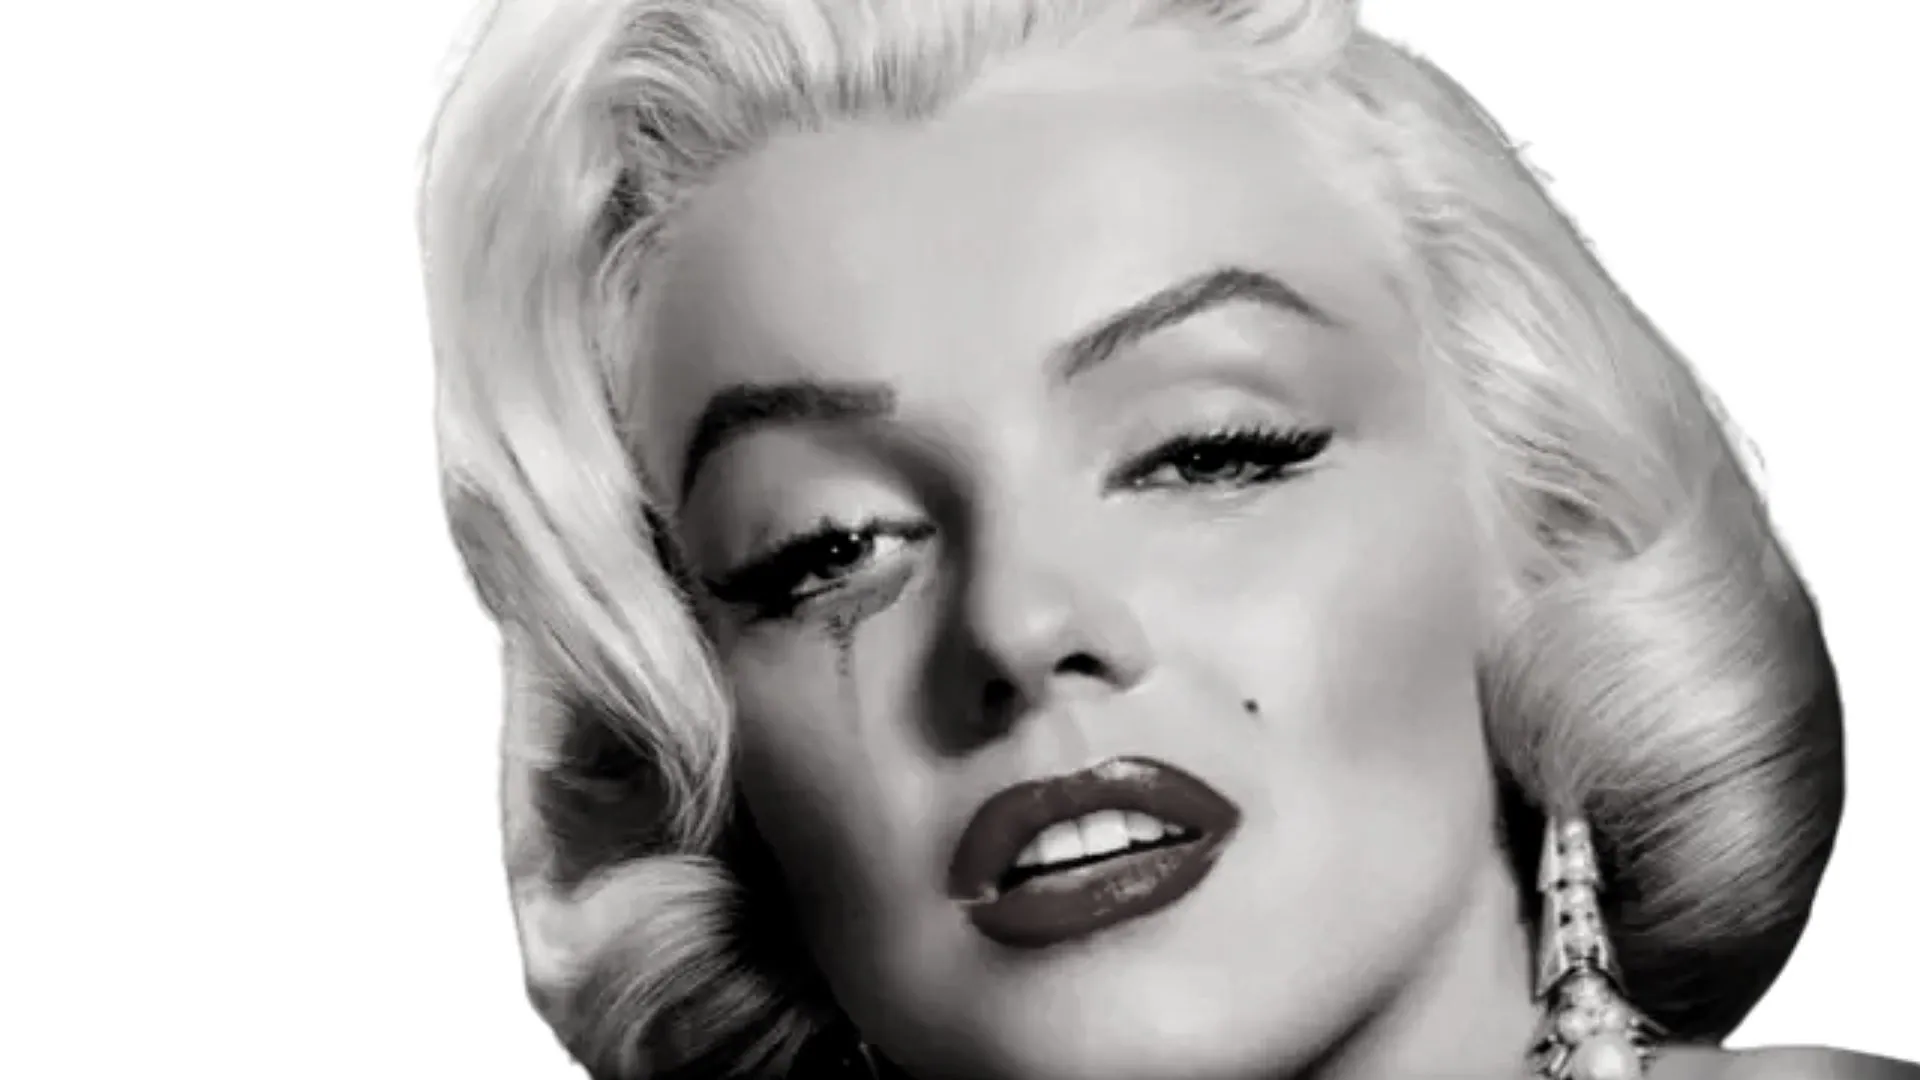 _Marilyn Monroe Biopic ‘Blonde’ Took The Second Spot on Netflix Charts In Debut Week